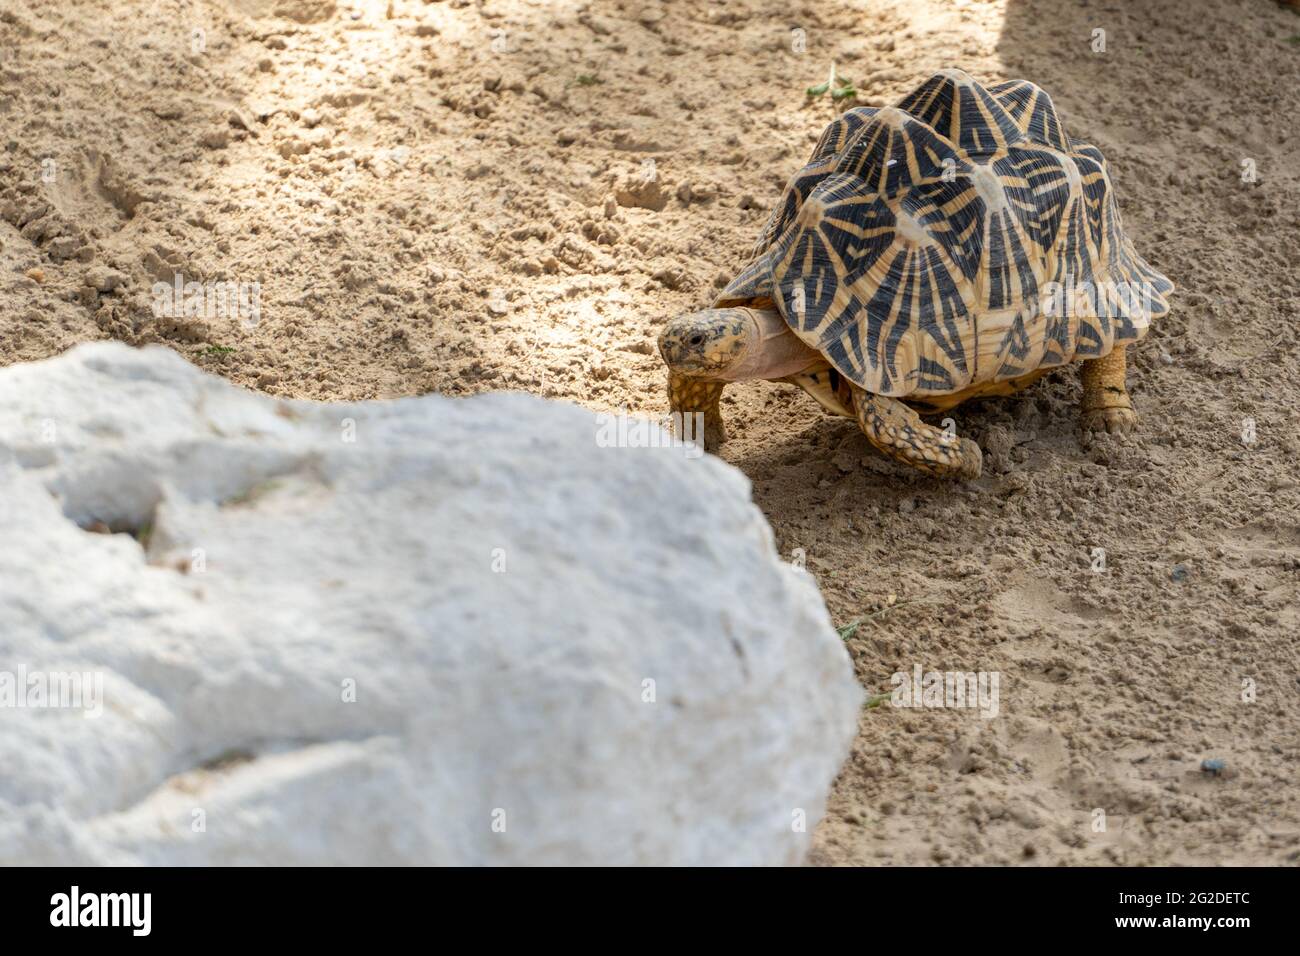 Indian star tortoise (Geochelone elegans) walks behind a rock in India, Pakistan or Sri Lanka. Stock Photo